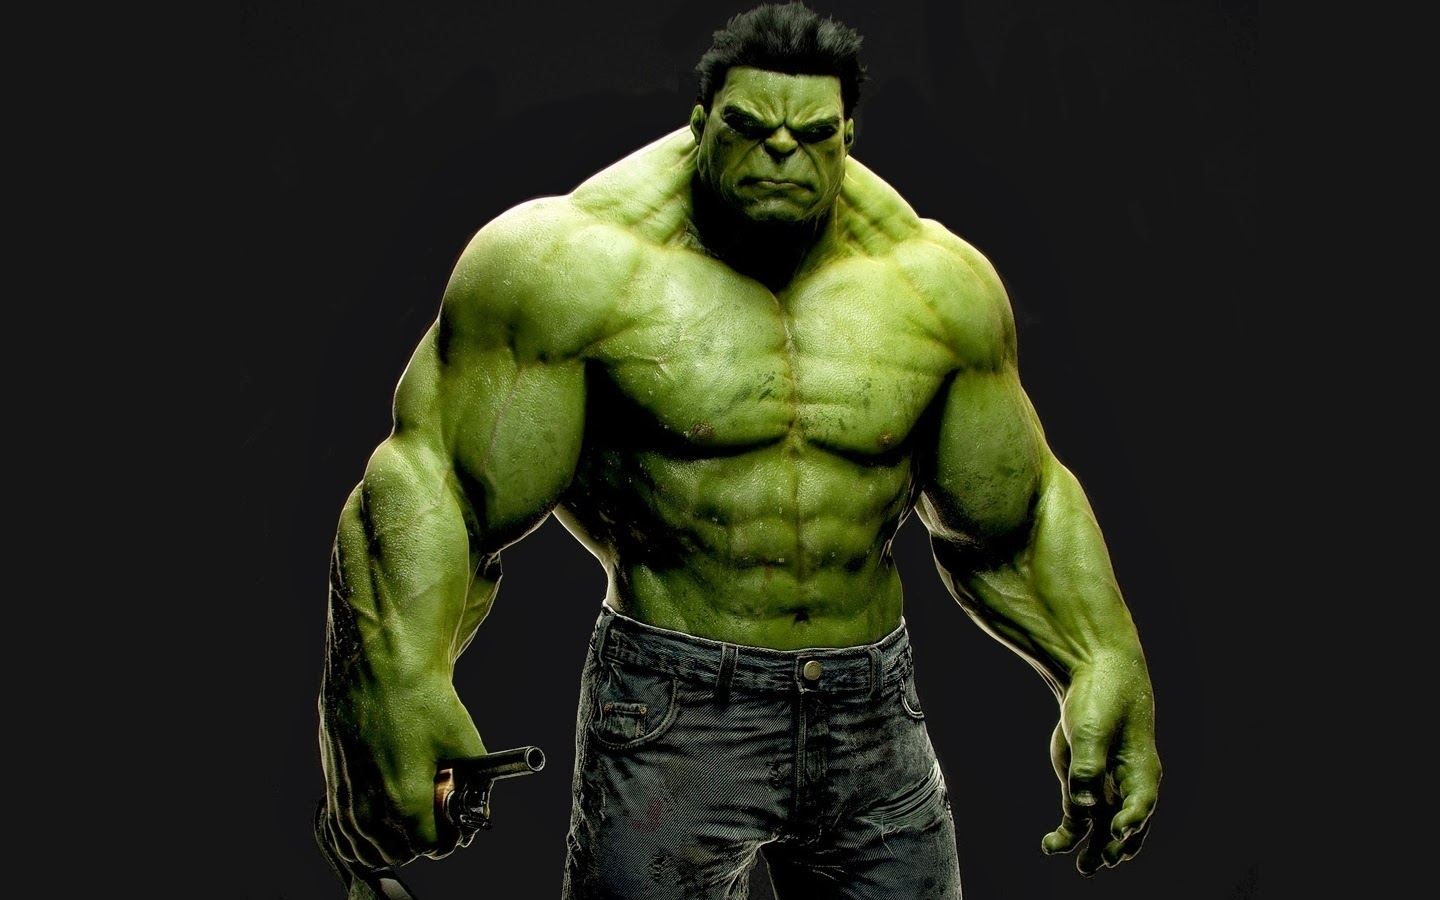 Hulk Smash Avengers Wallpaper Image Pictures Becuo